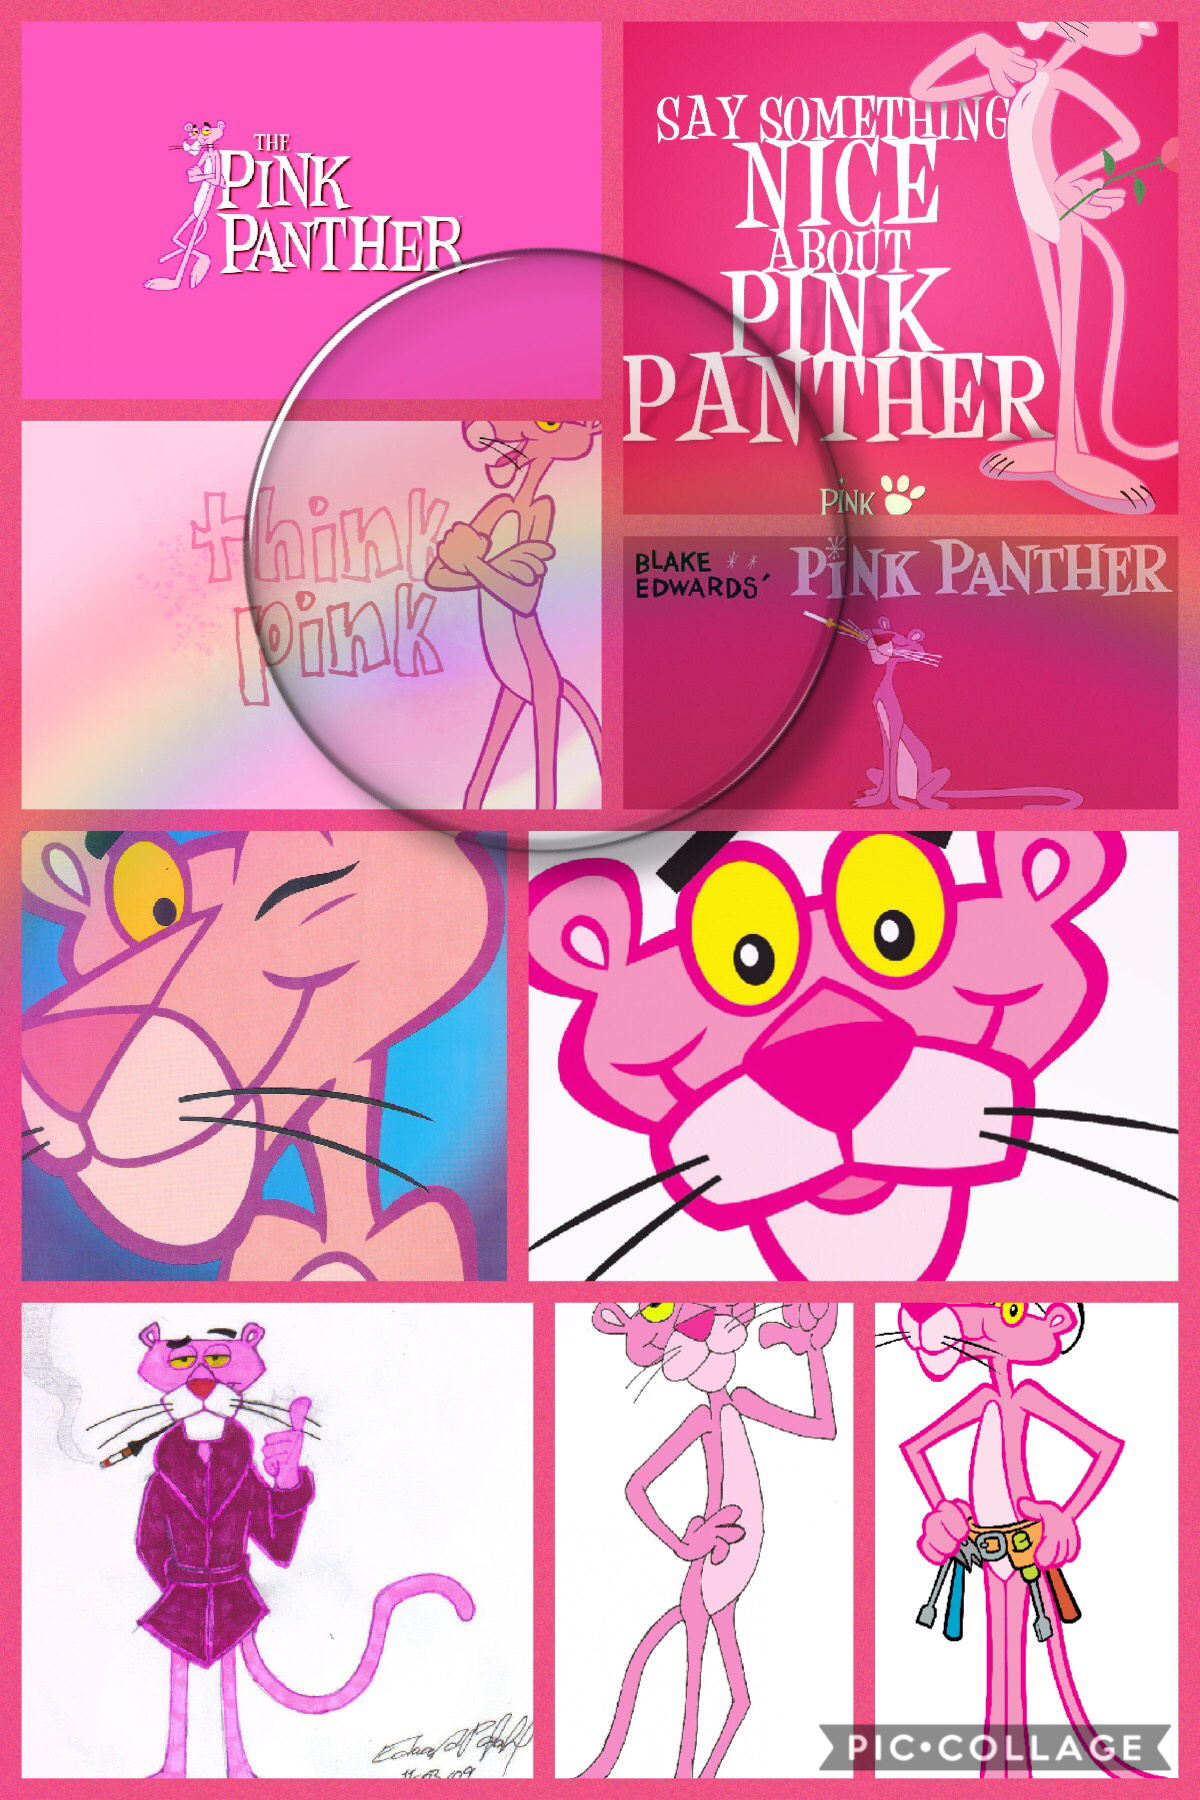 Love pink panther 🐆 